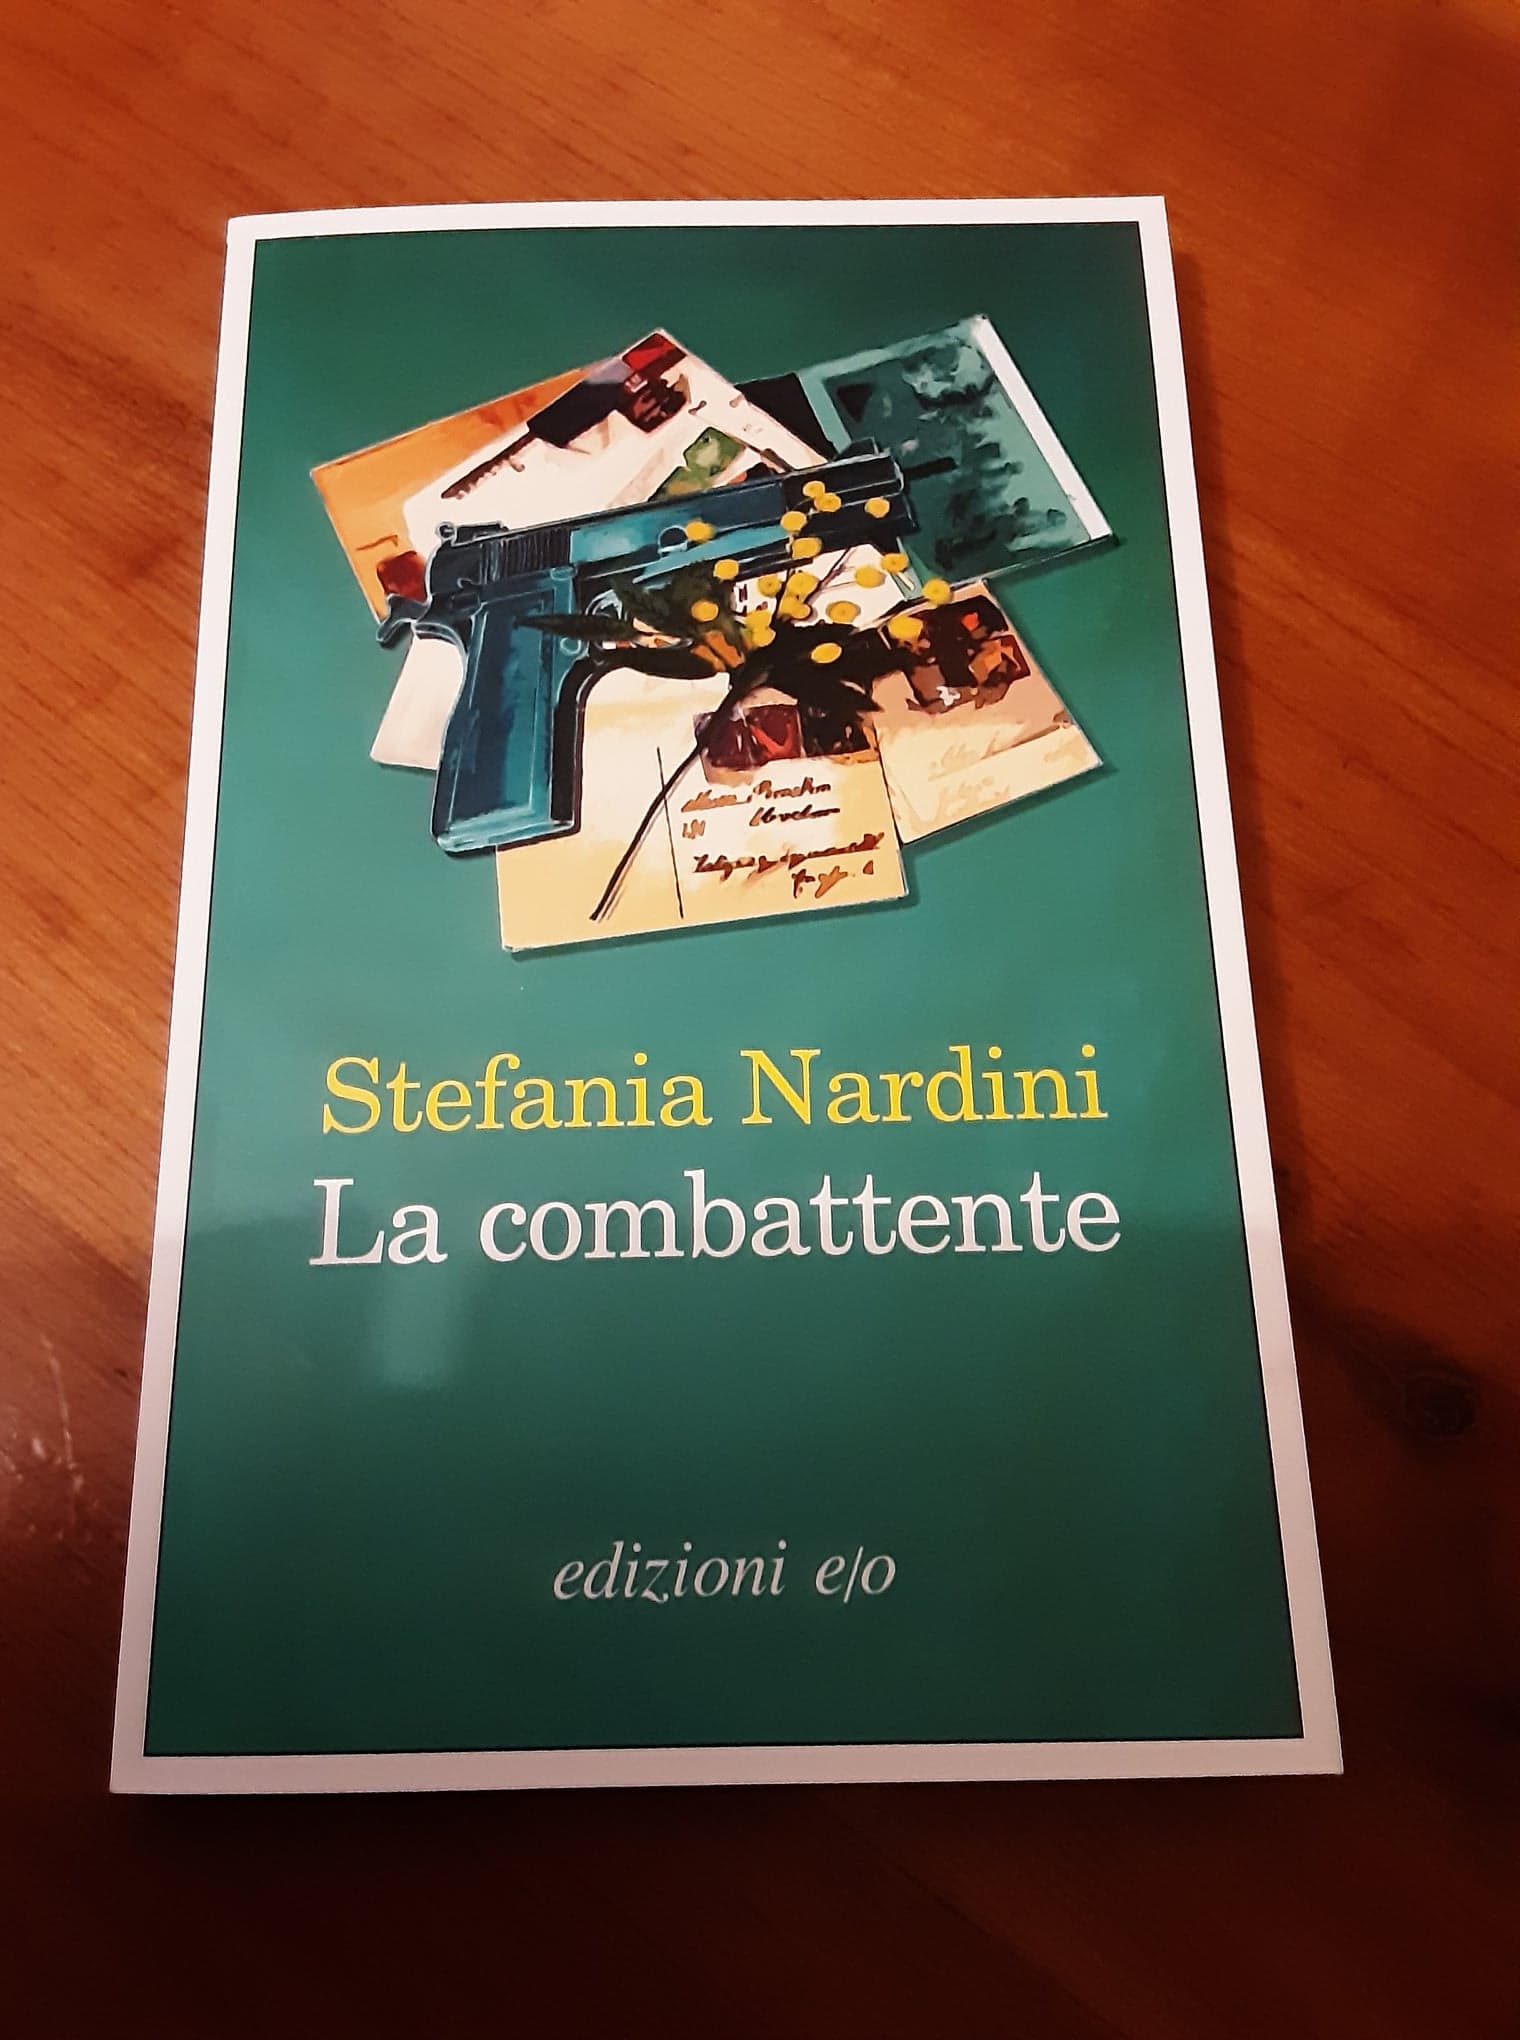 “La combattente” – Stefania Nardini